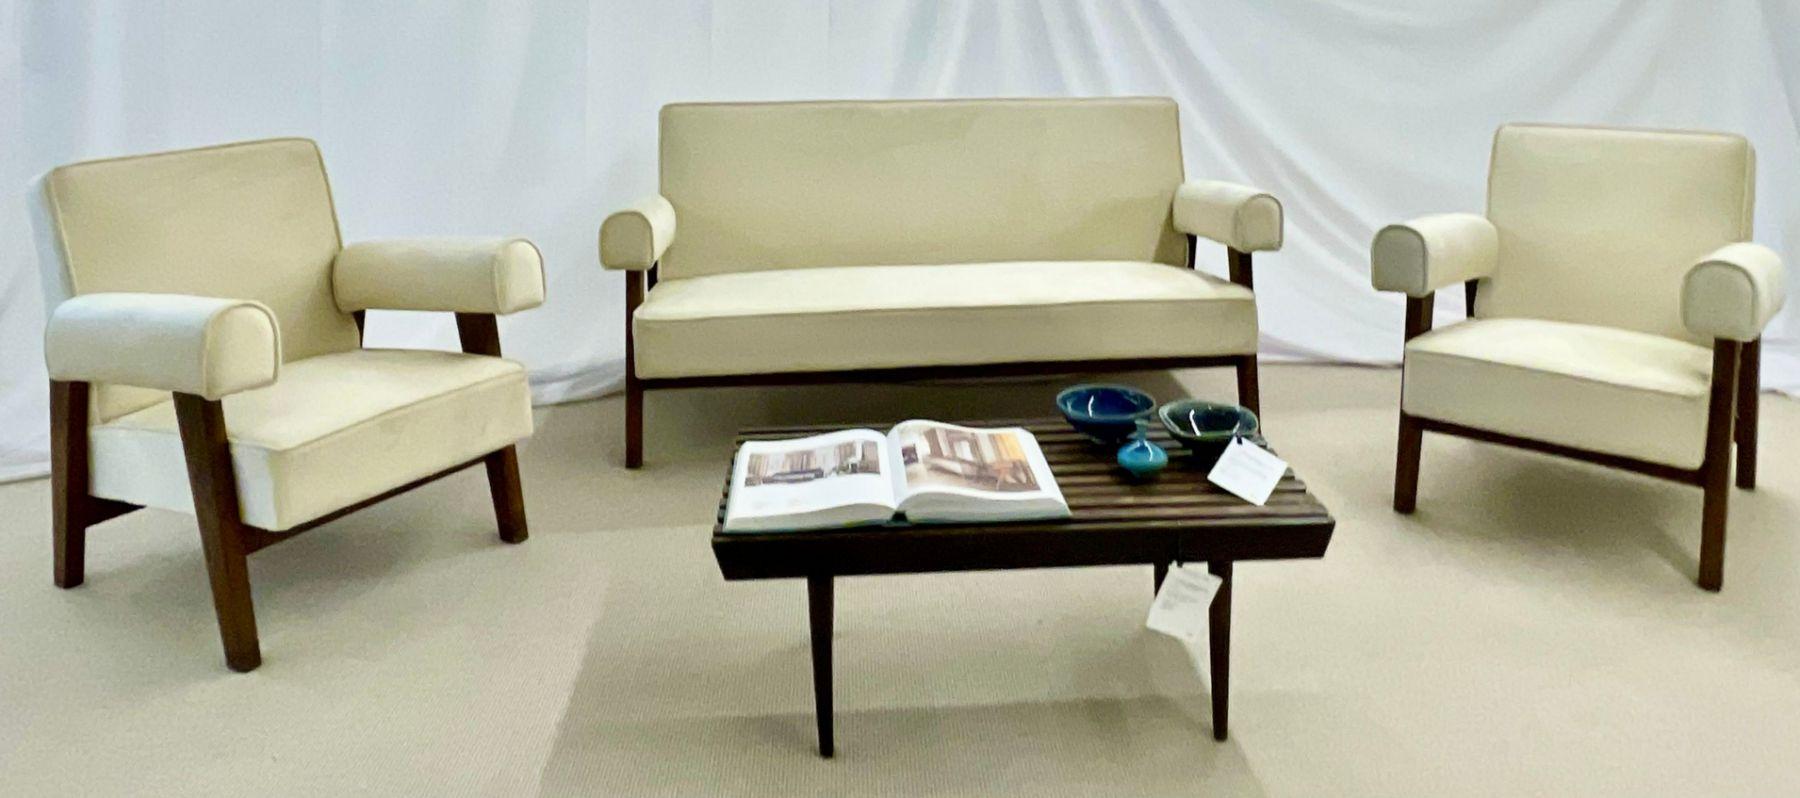 Pierre Jeanneret, French Mid-Century Modern, Bridge Sofa, Chandigarh, 1960s For Sale 10